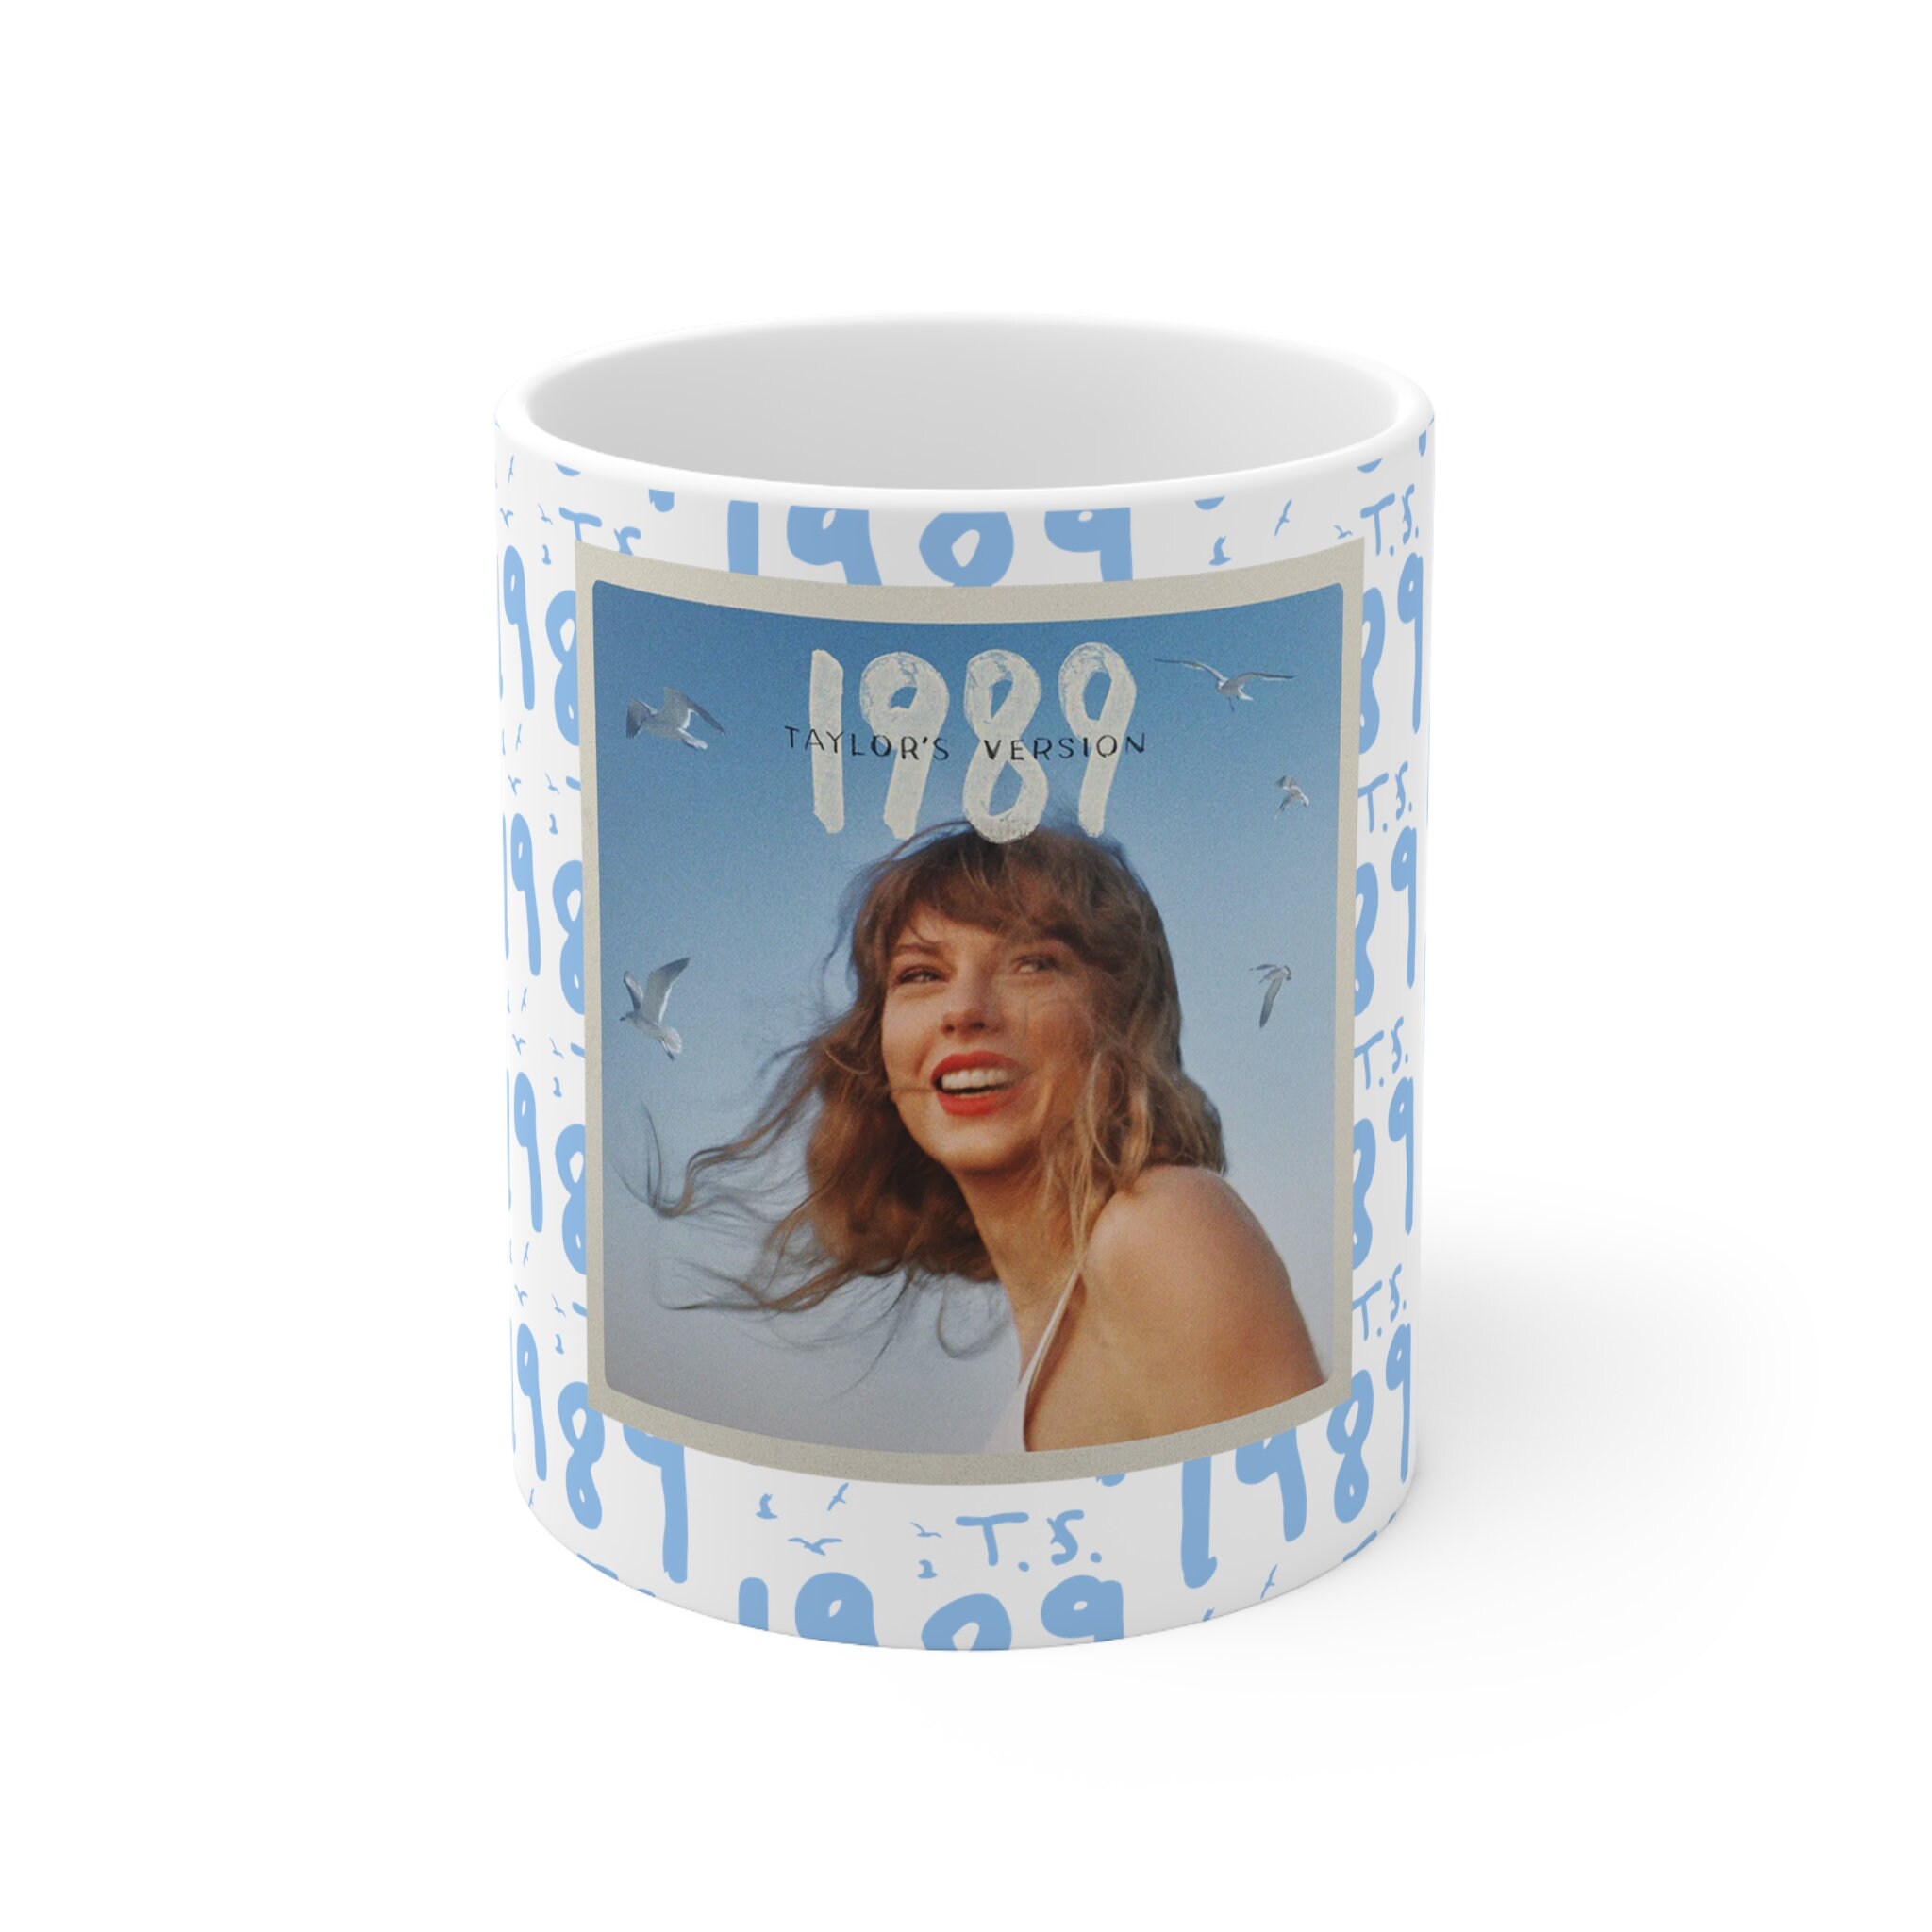 Taylors Version Swiftea Mug, Taylor Swift Mug, 1989 Mug Tayl